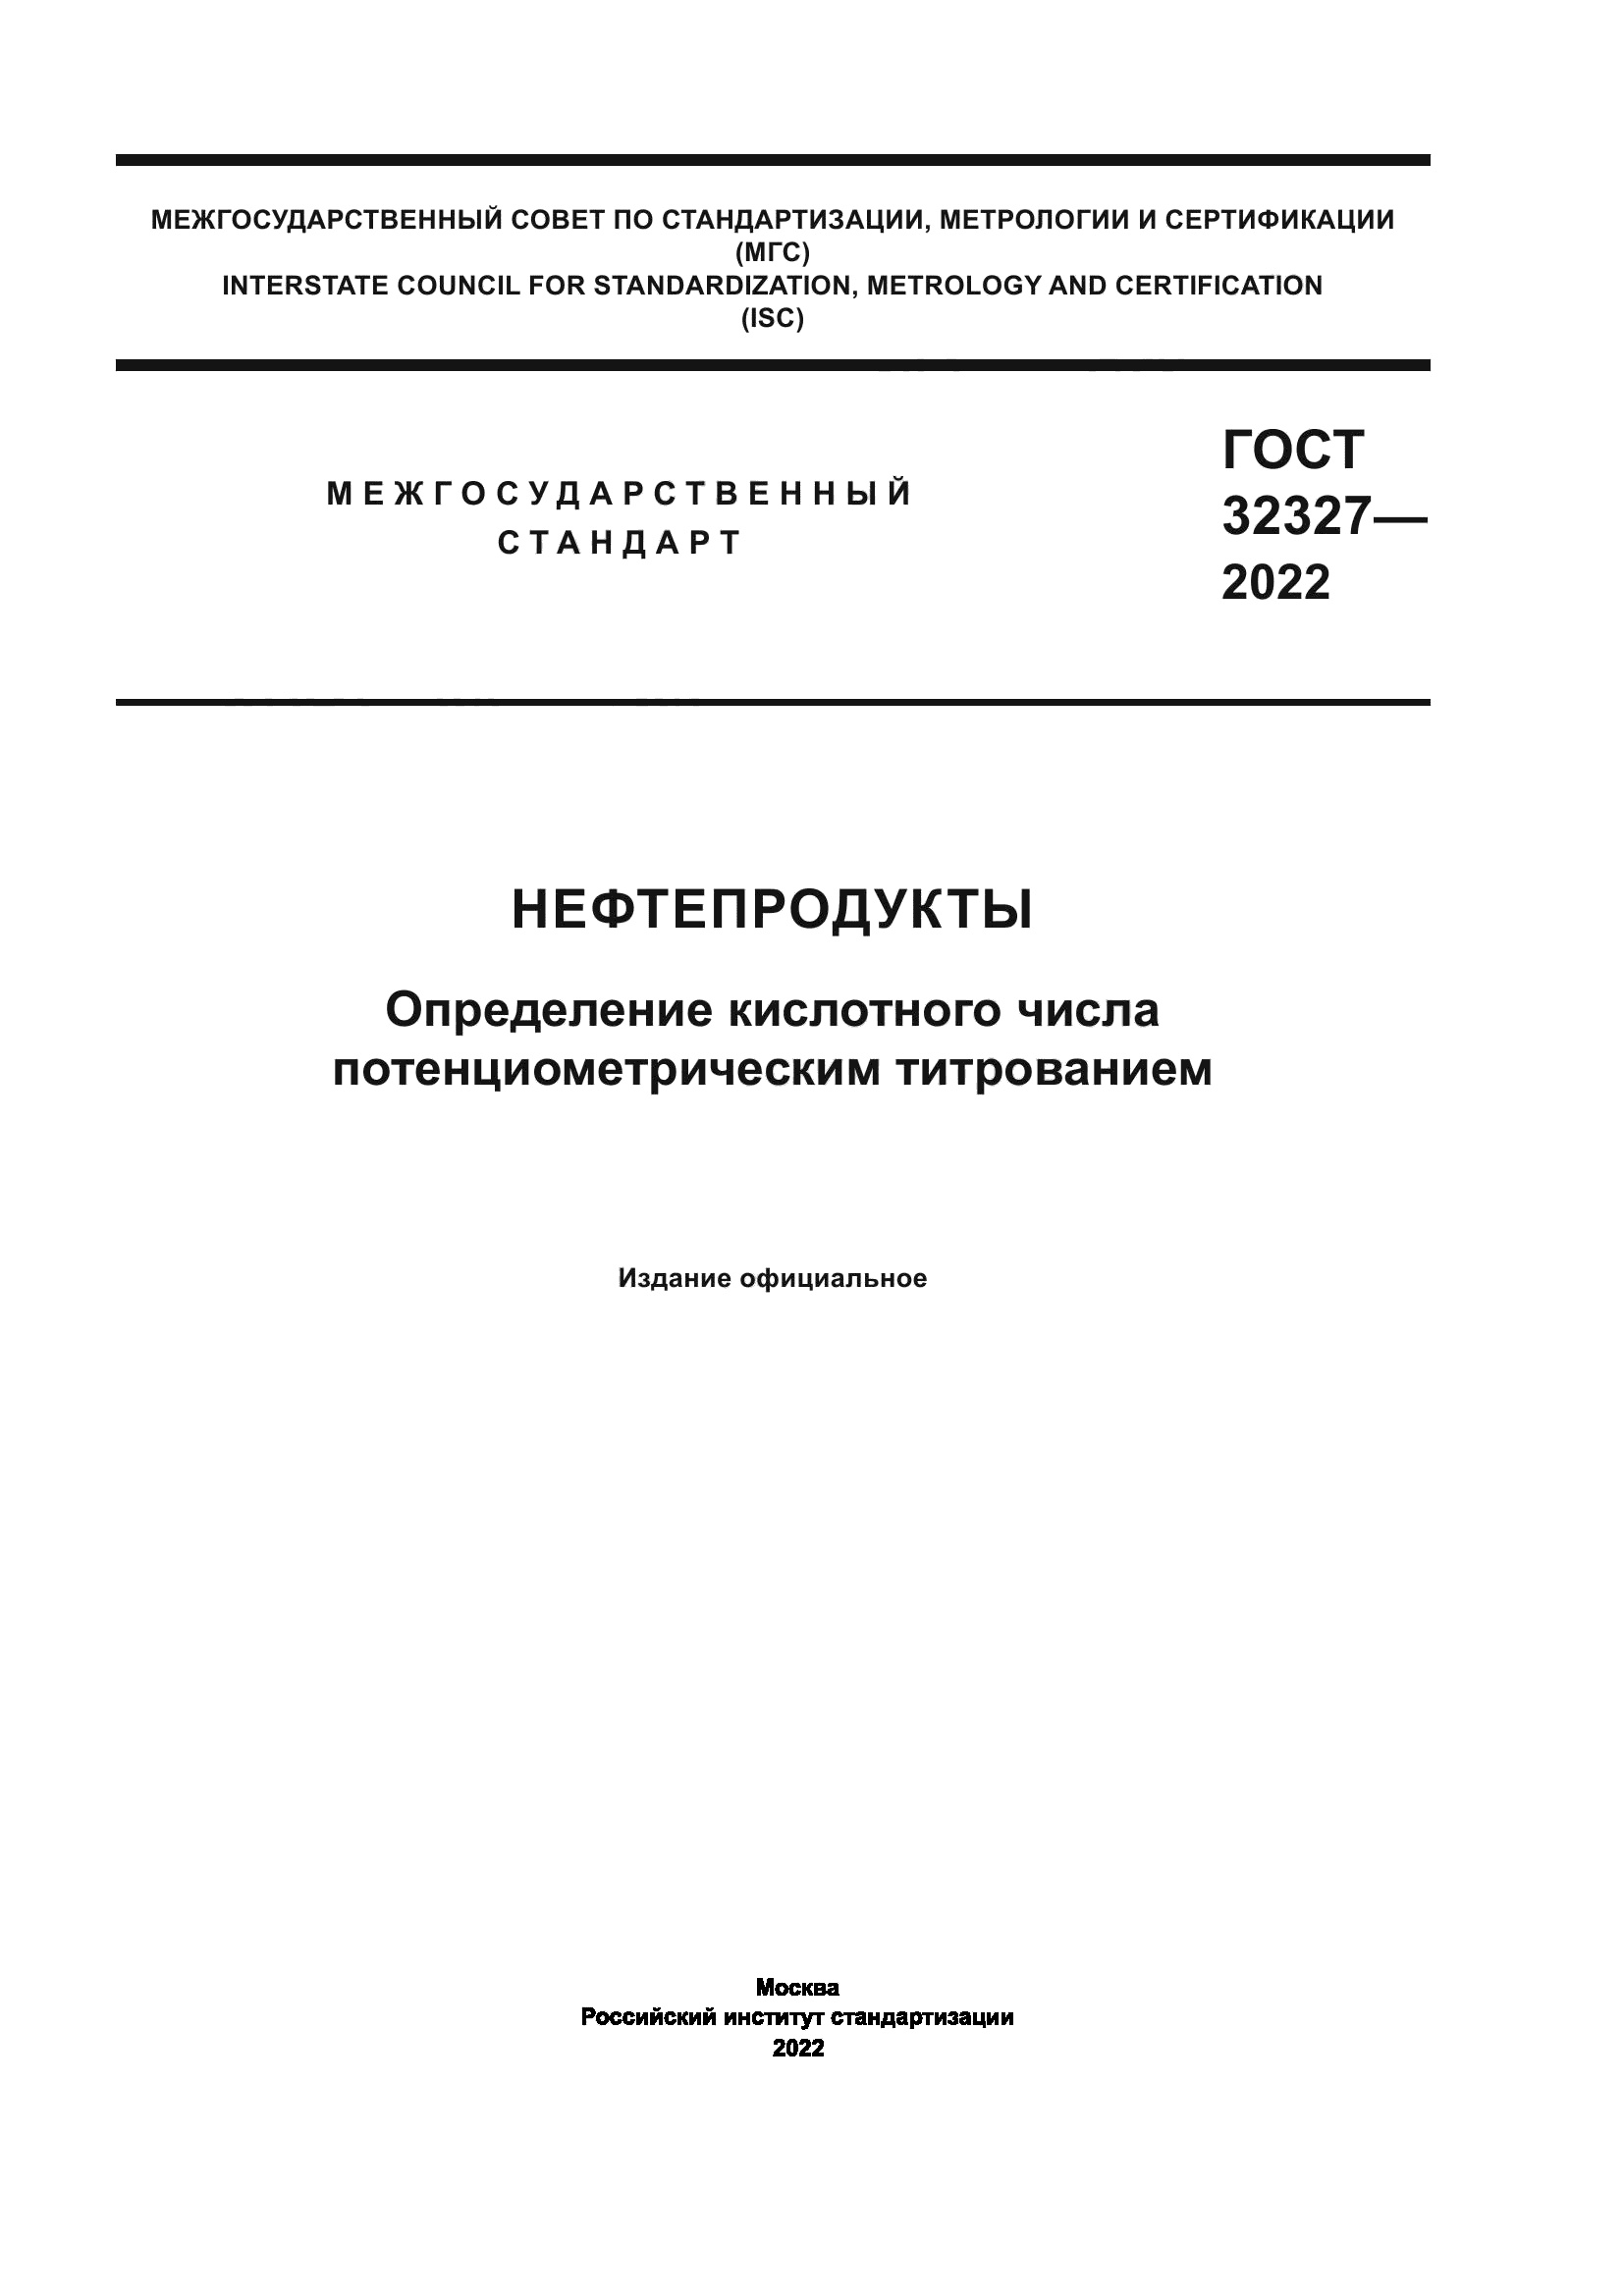 ГОСТ 32327-2022